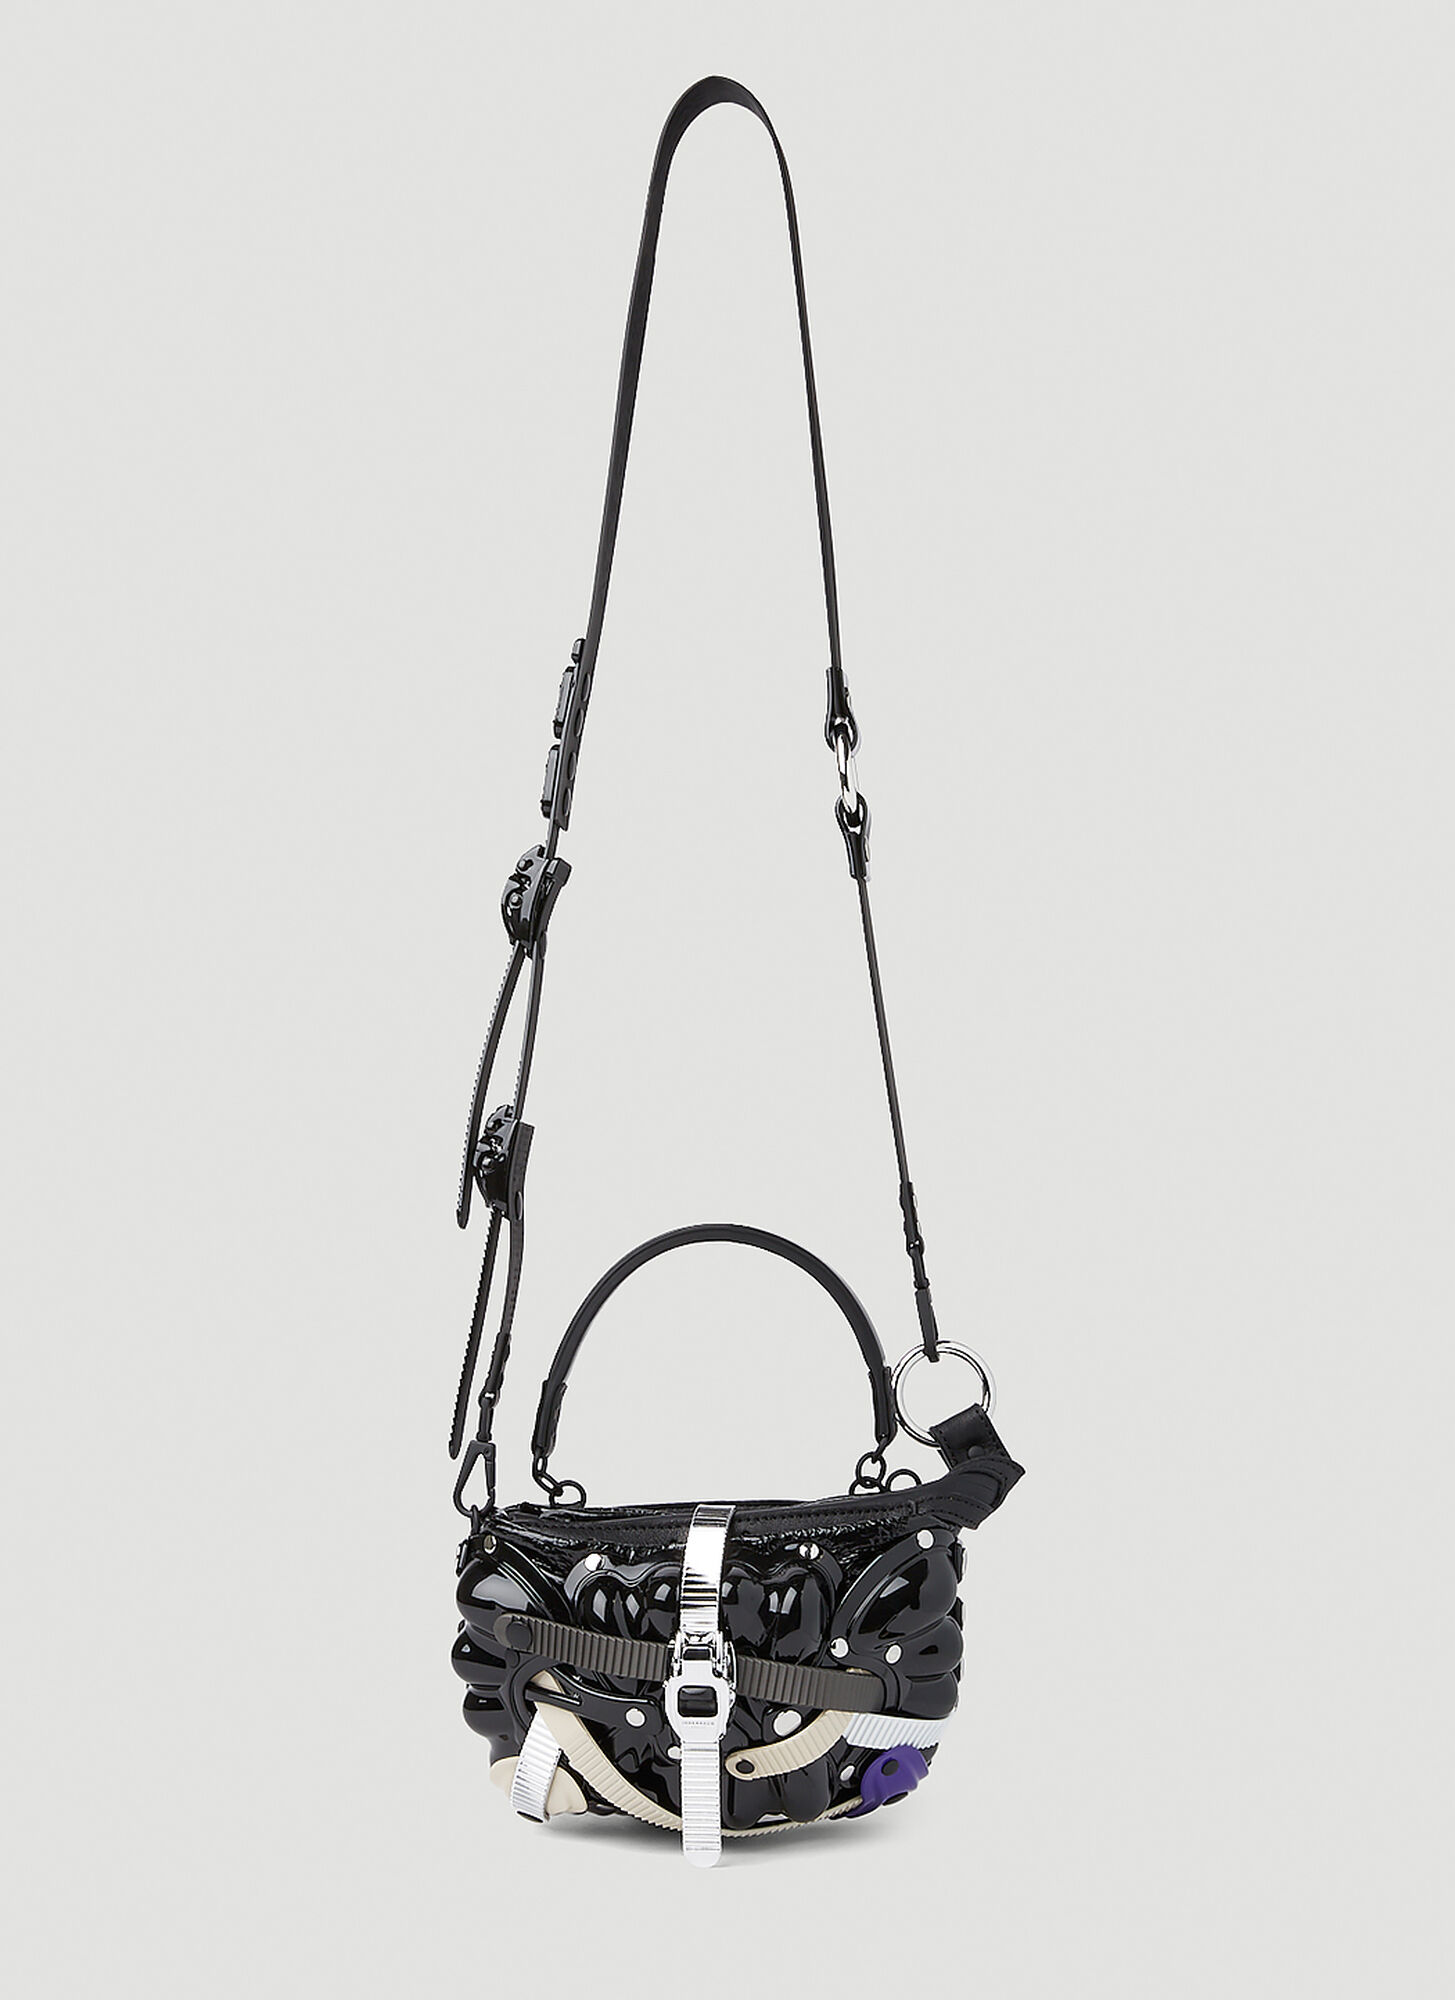 Innerraum Object I35 Shoulder Bag In Black